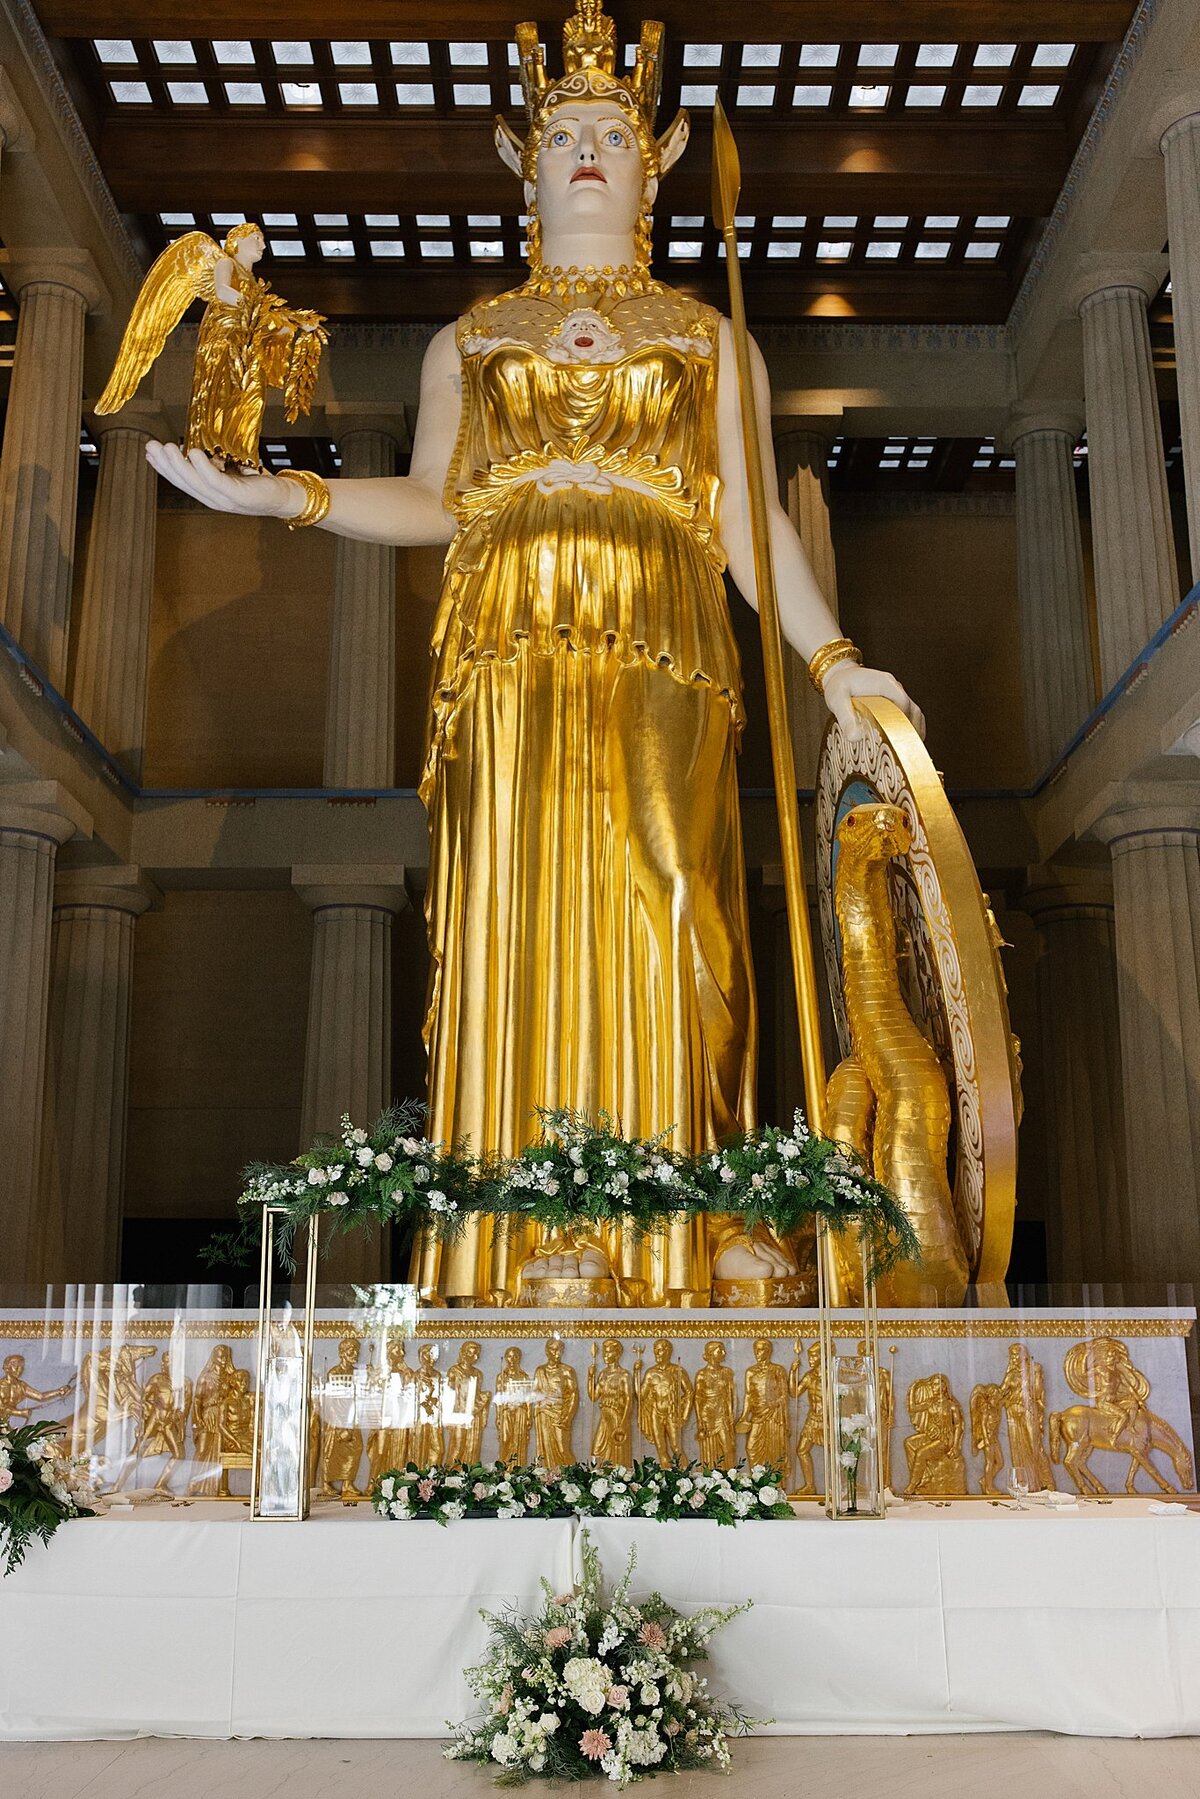 Nashville Gold and White Wedding at Parthenon Nashville with Athena statue